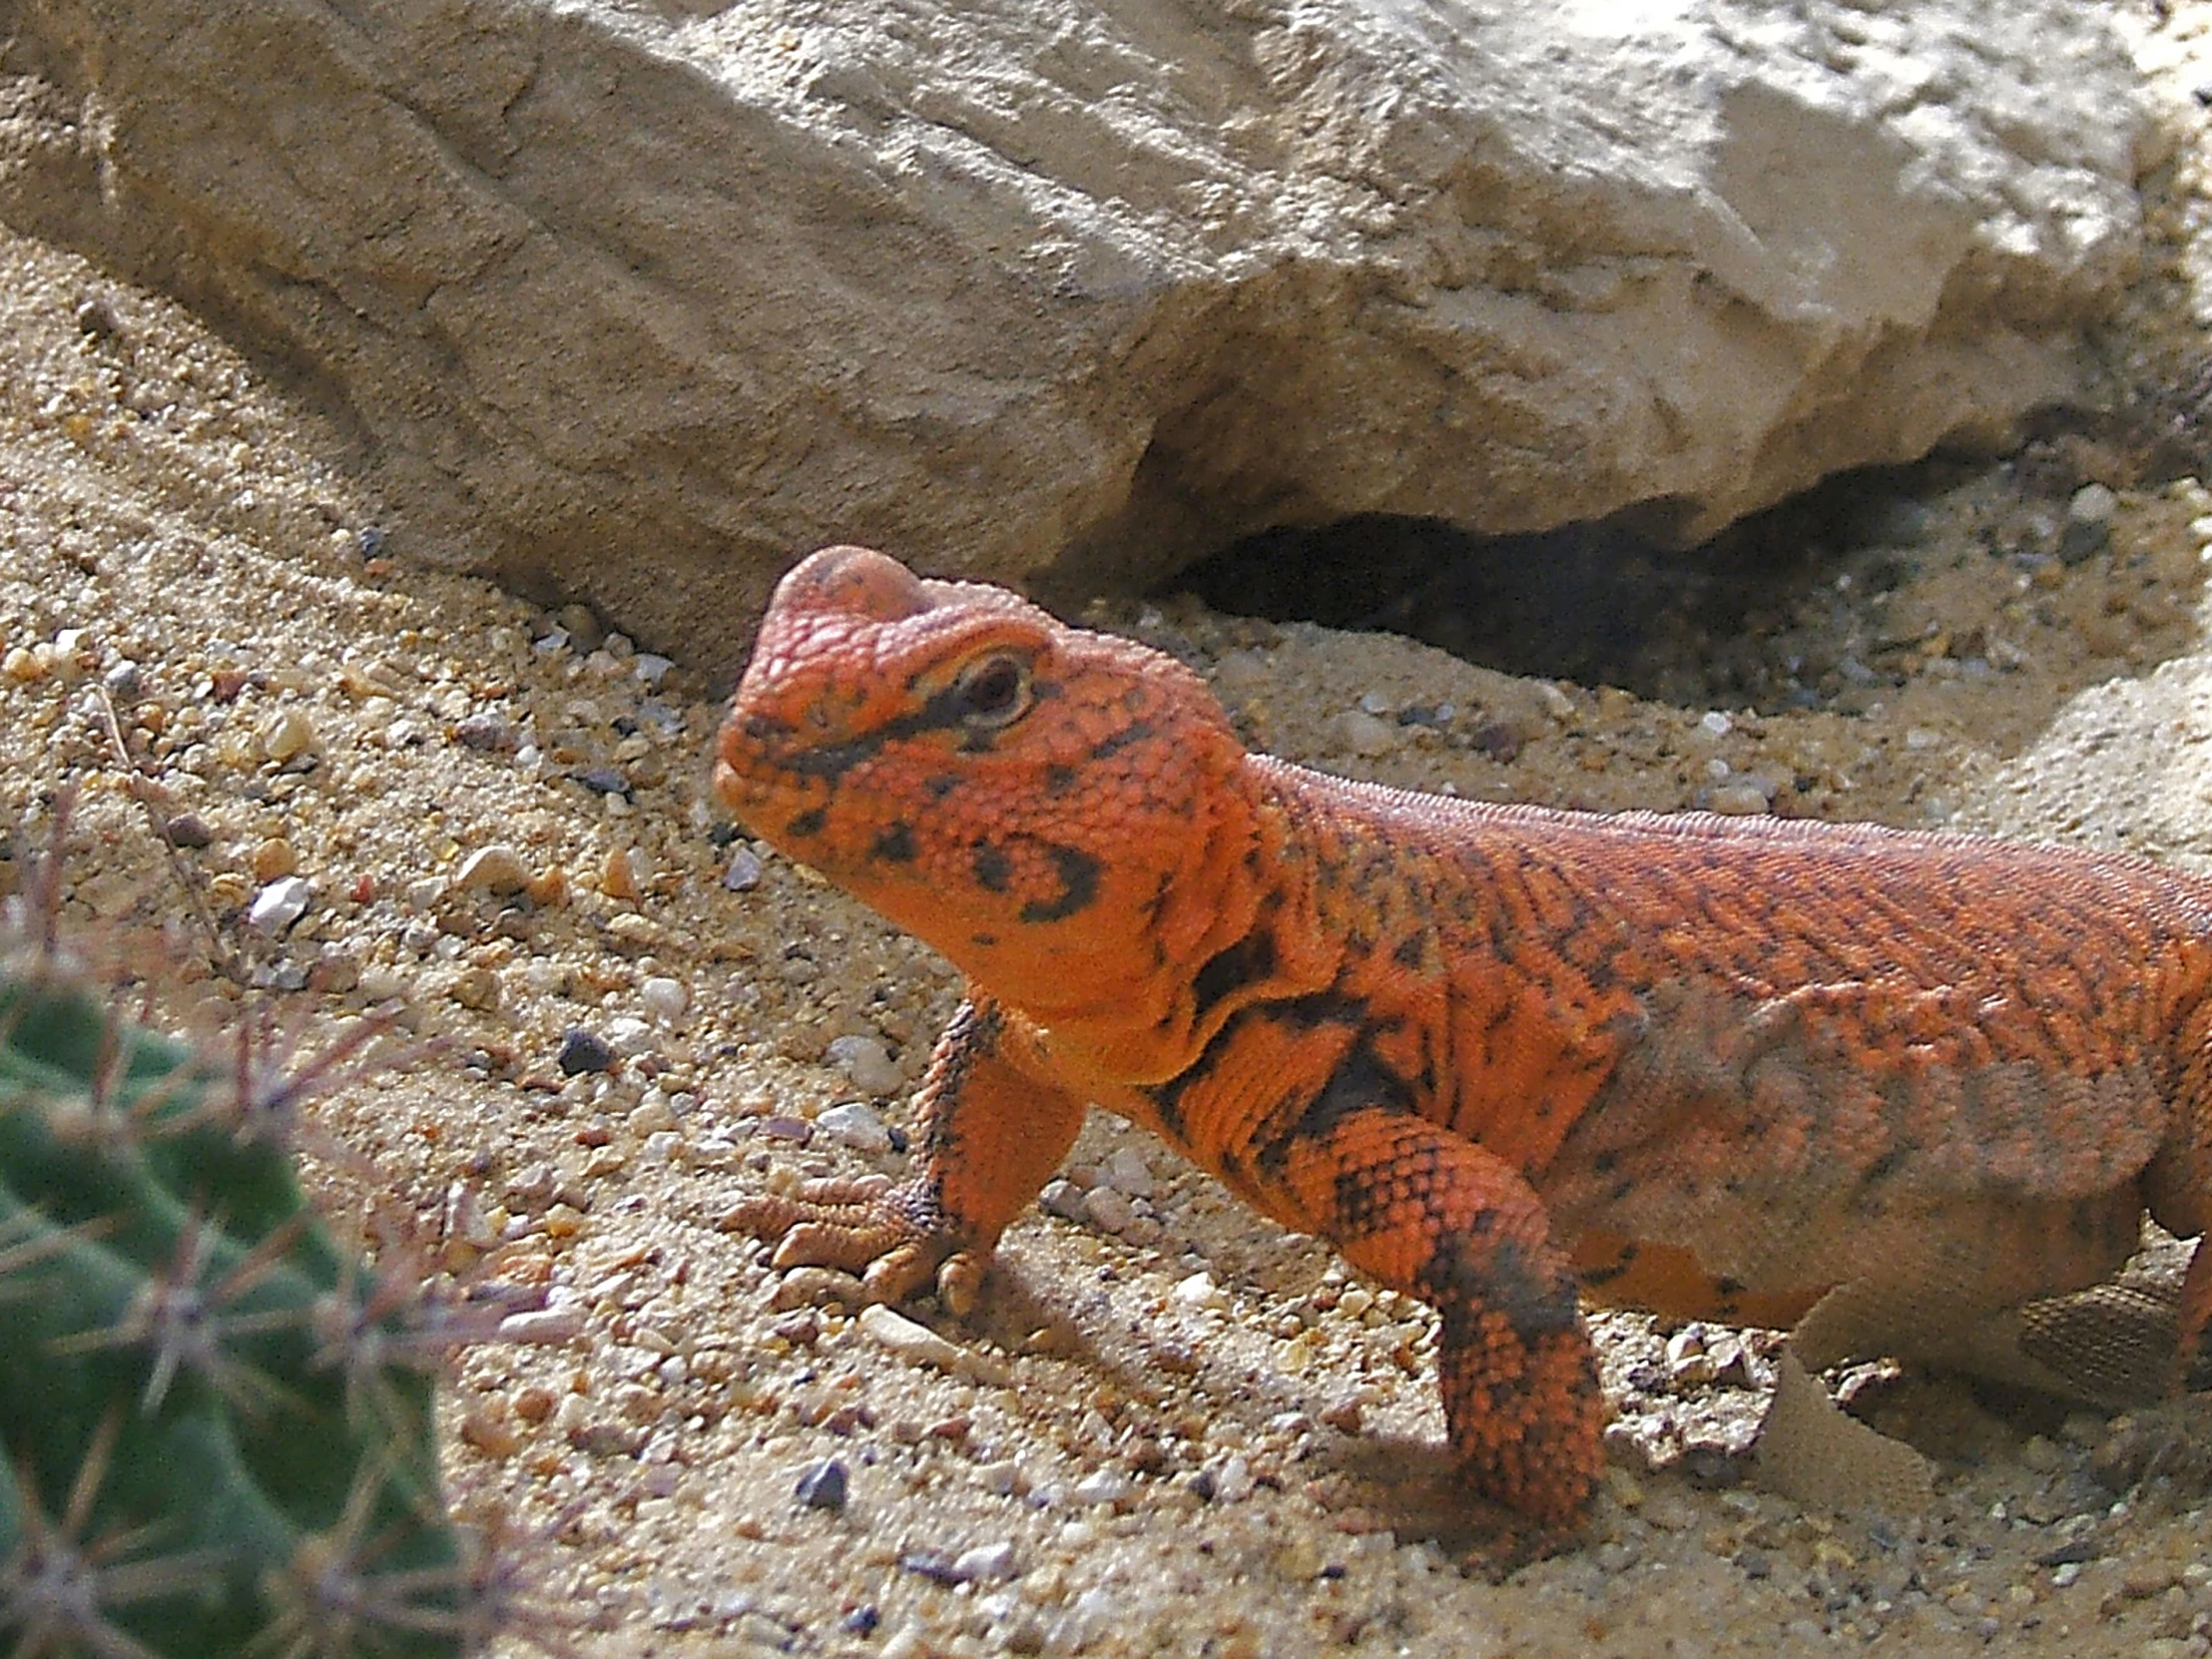 a close up of a lizard on sand near a tree